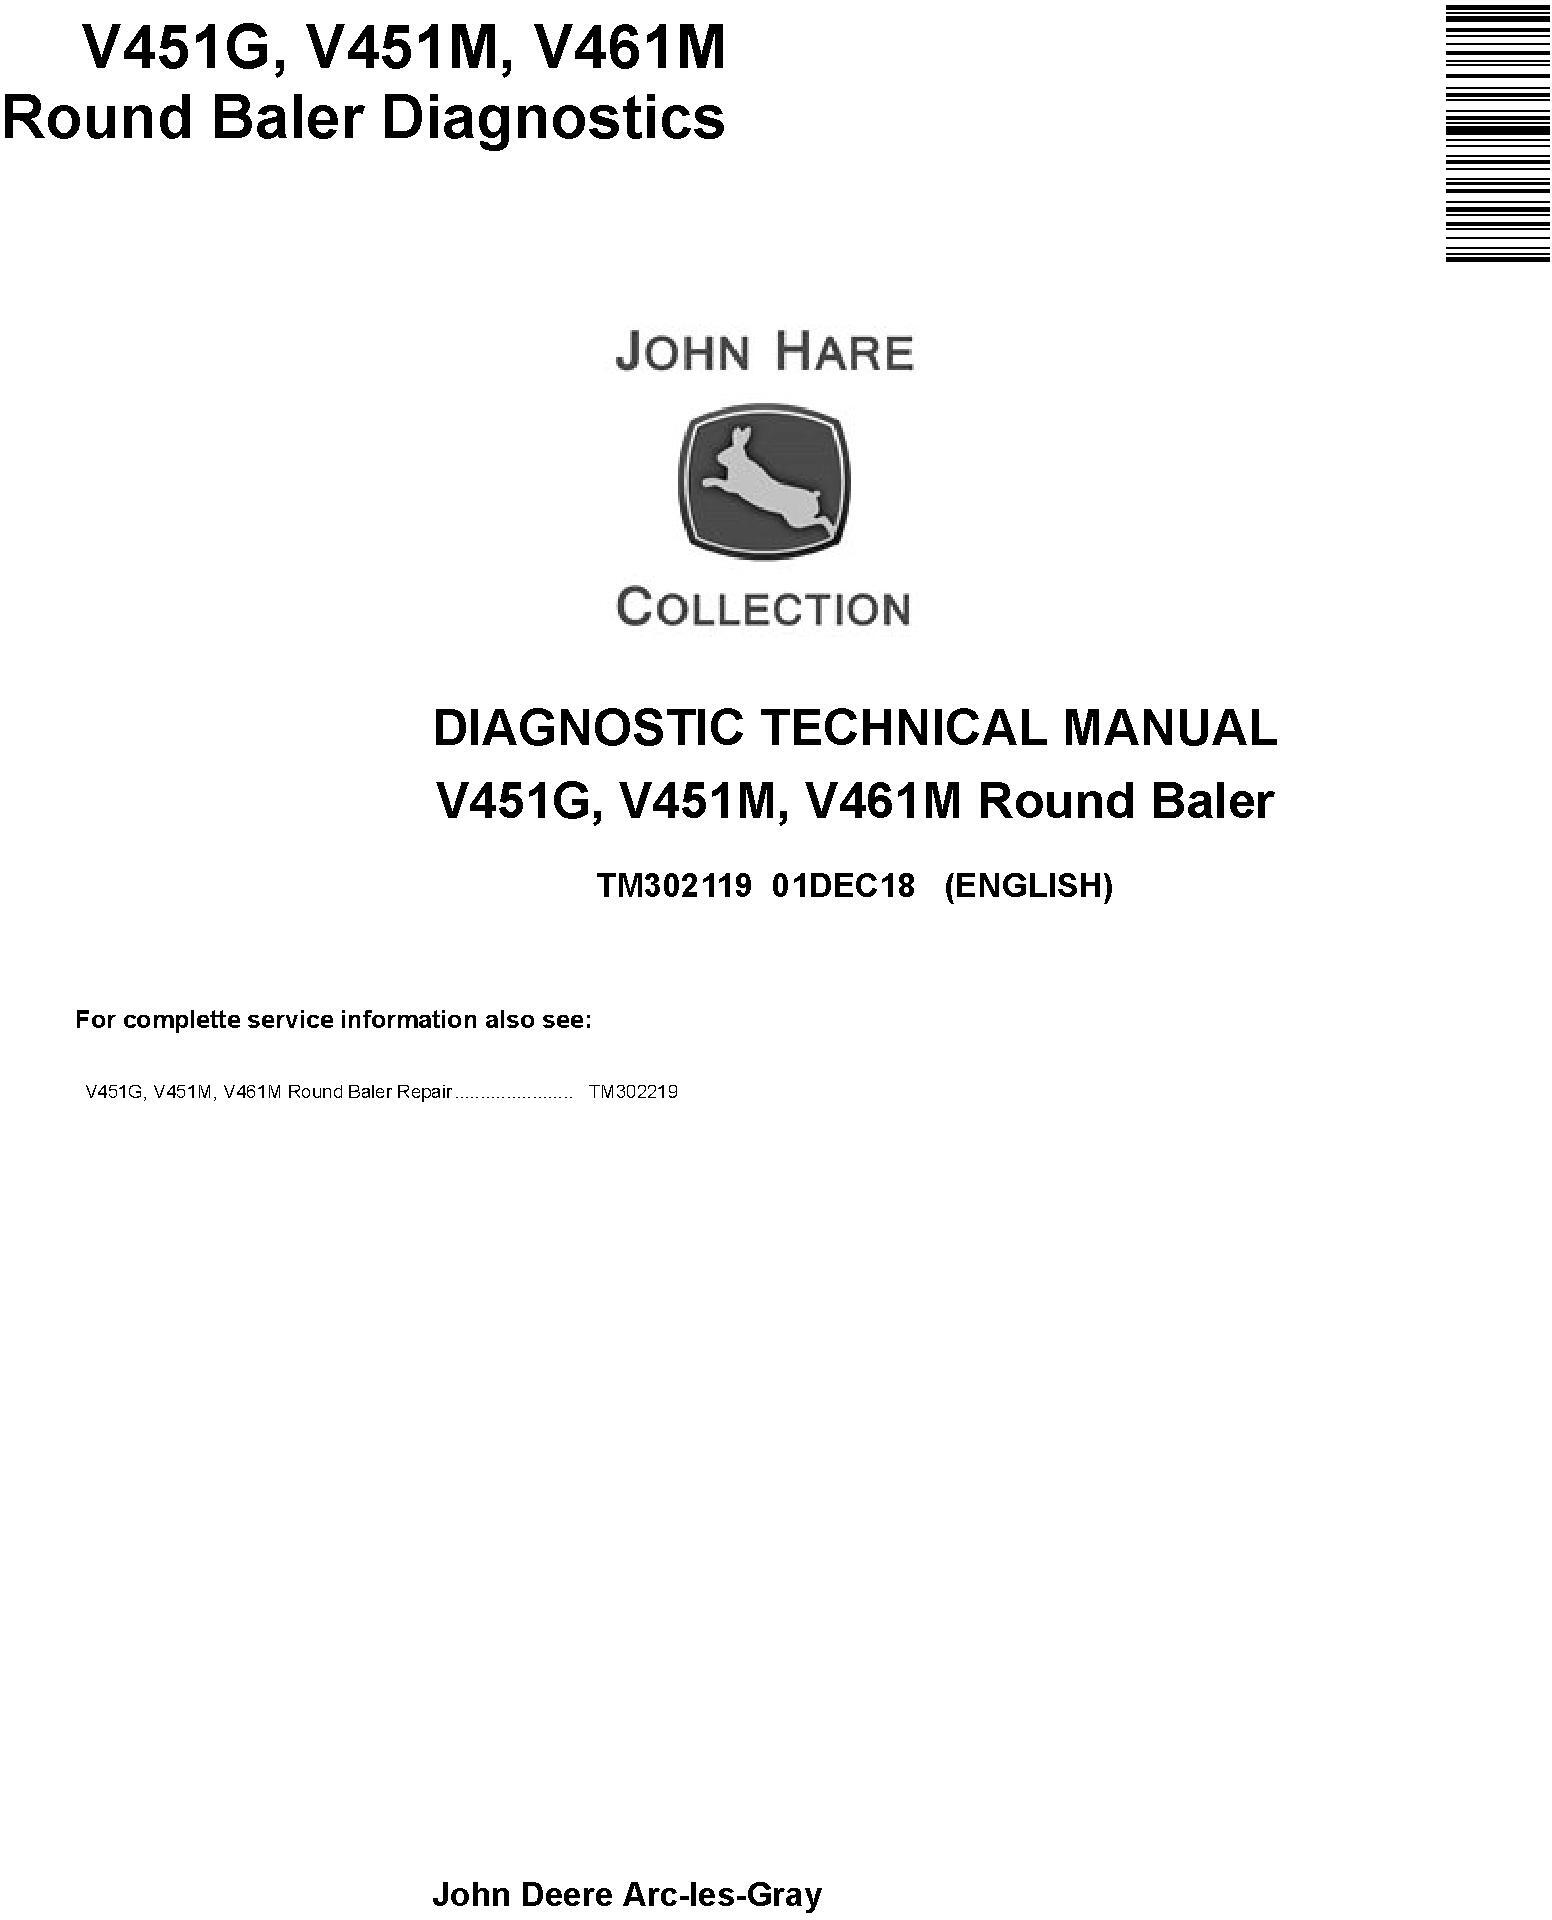 John Deere V451G V451M V461M Round Baler Diagnostic Technical Manual TM302119